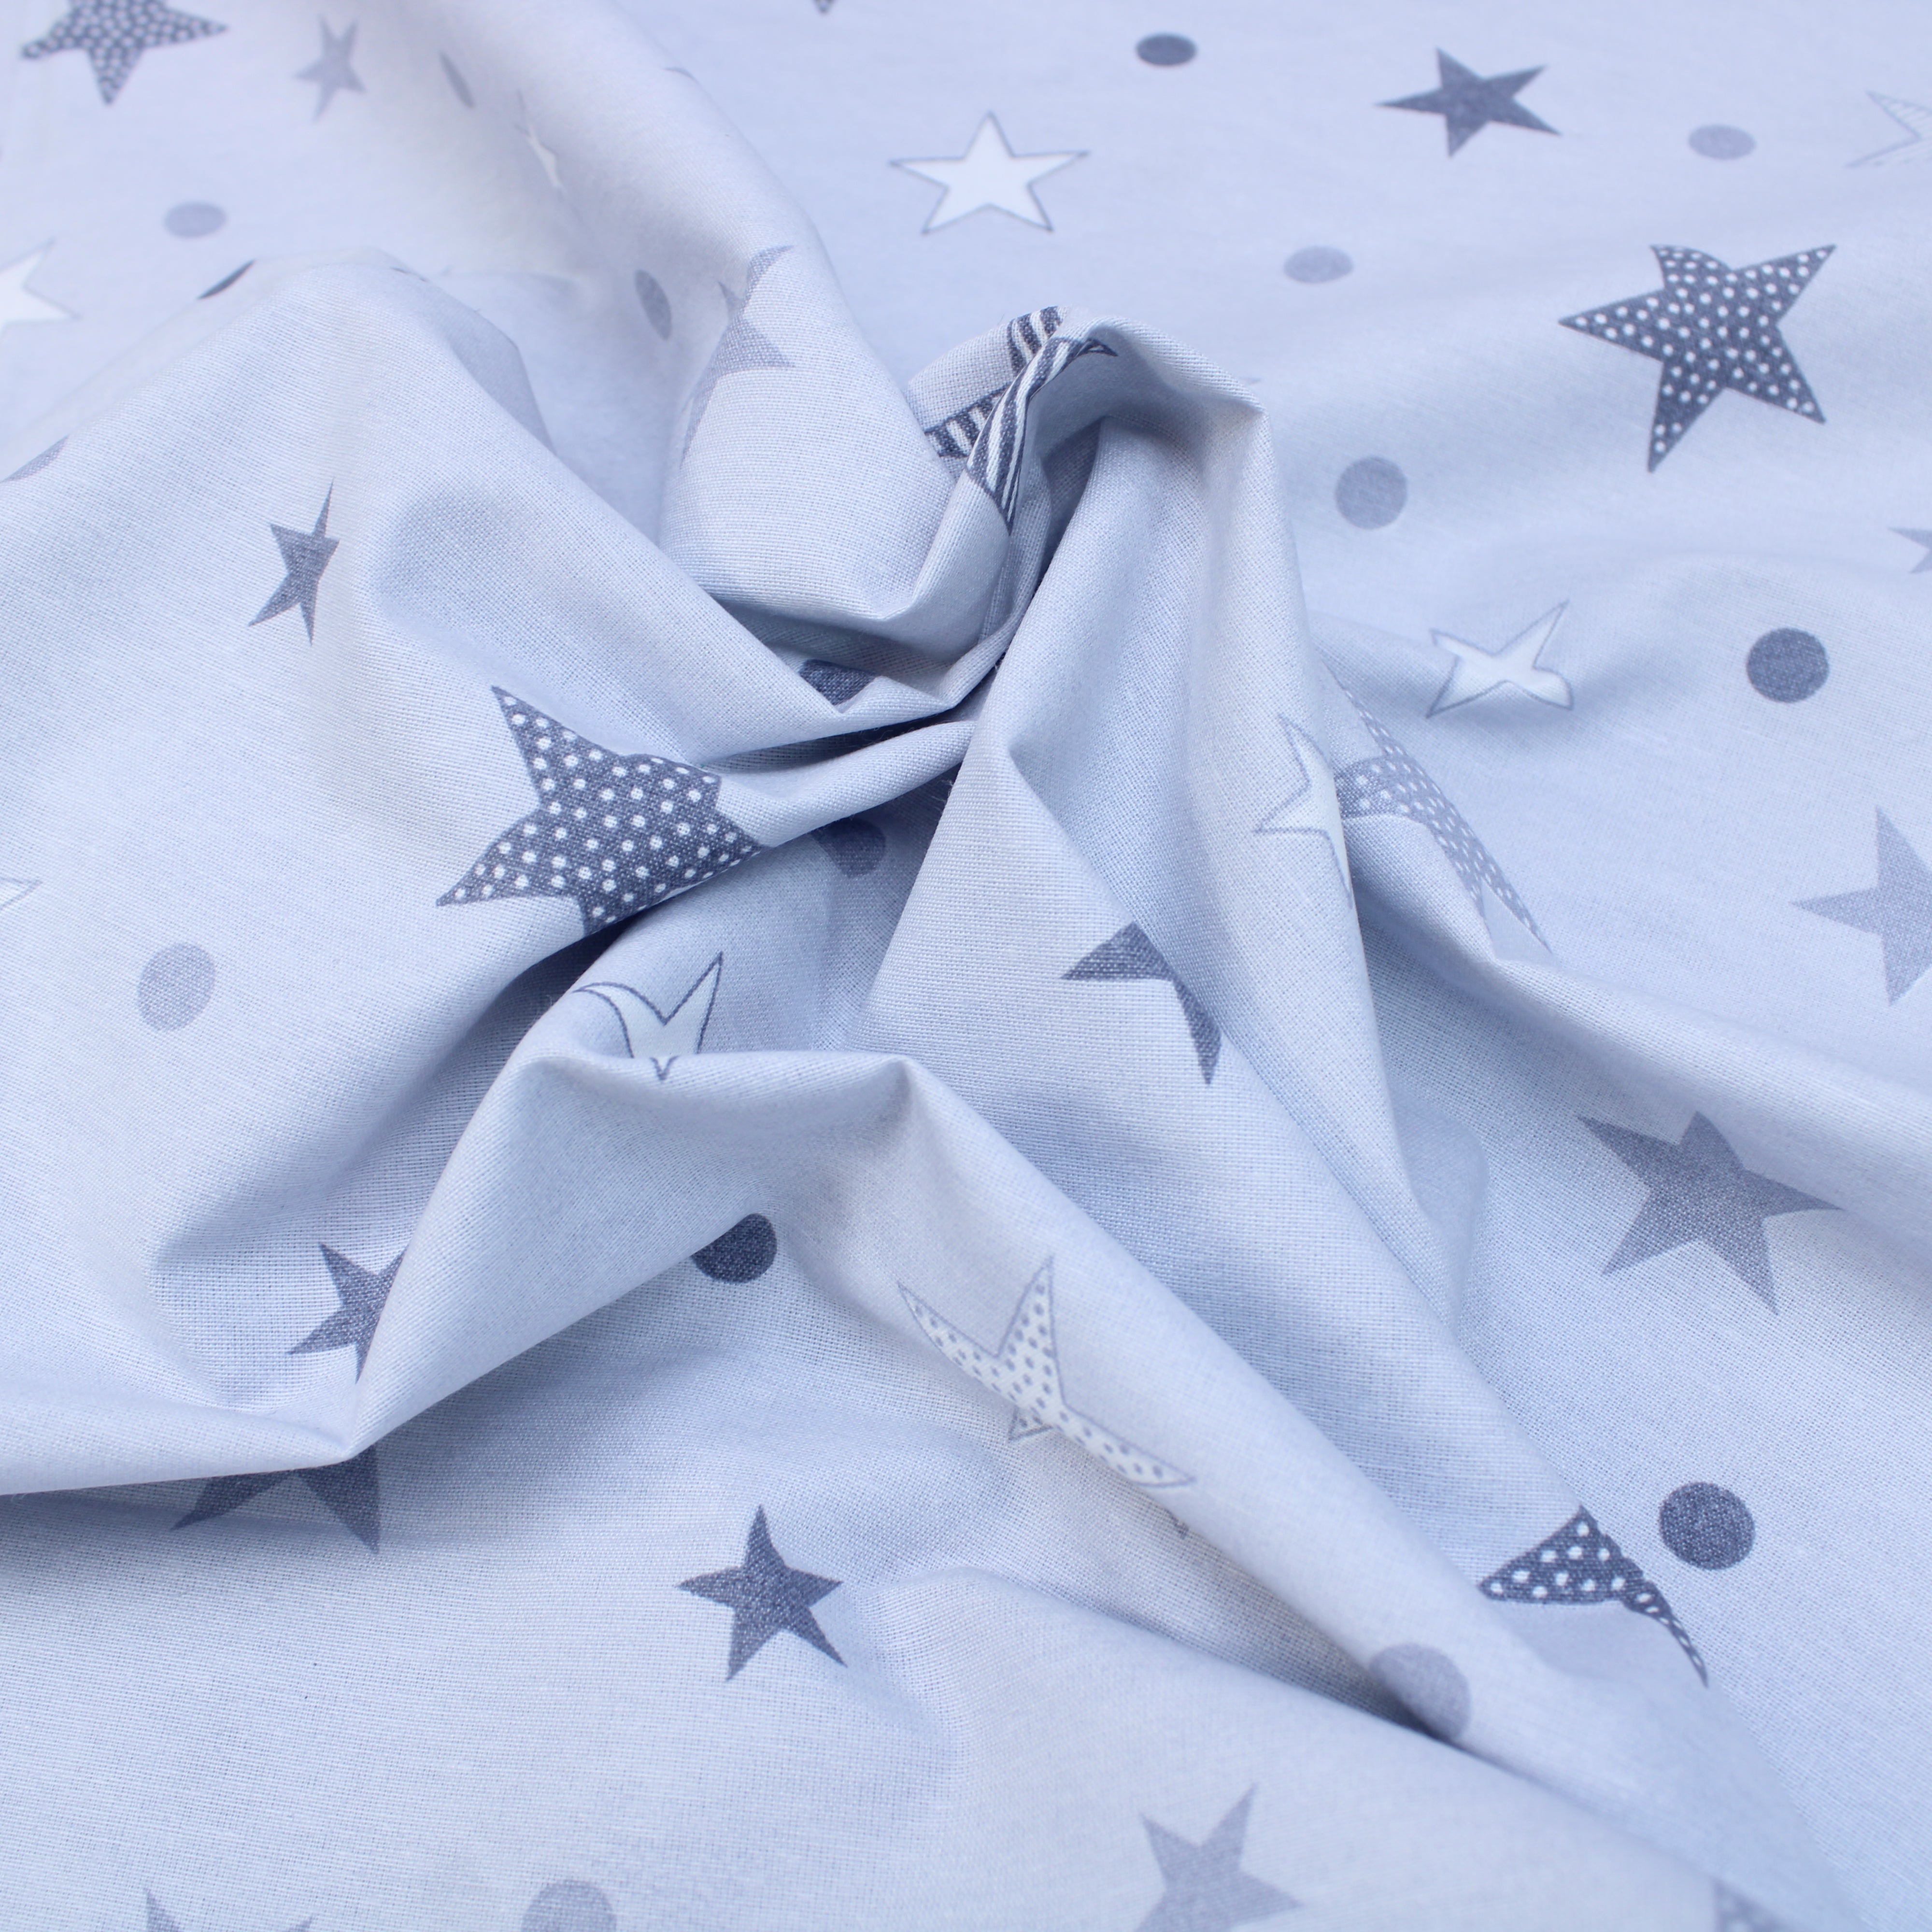 Premium Quality Super Wide Cotton Blend Sheeting, 'Grey Stars & Polka Dots', 94" Wide - White